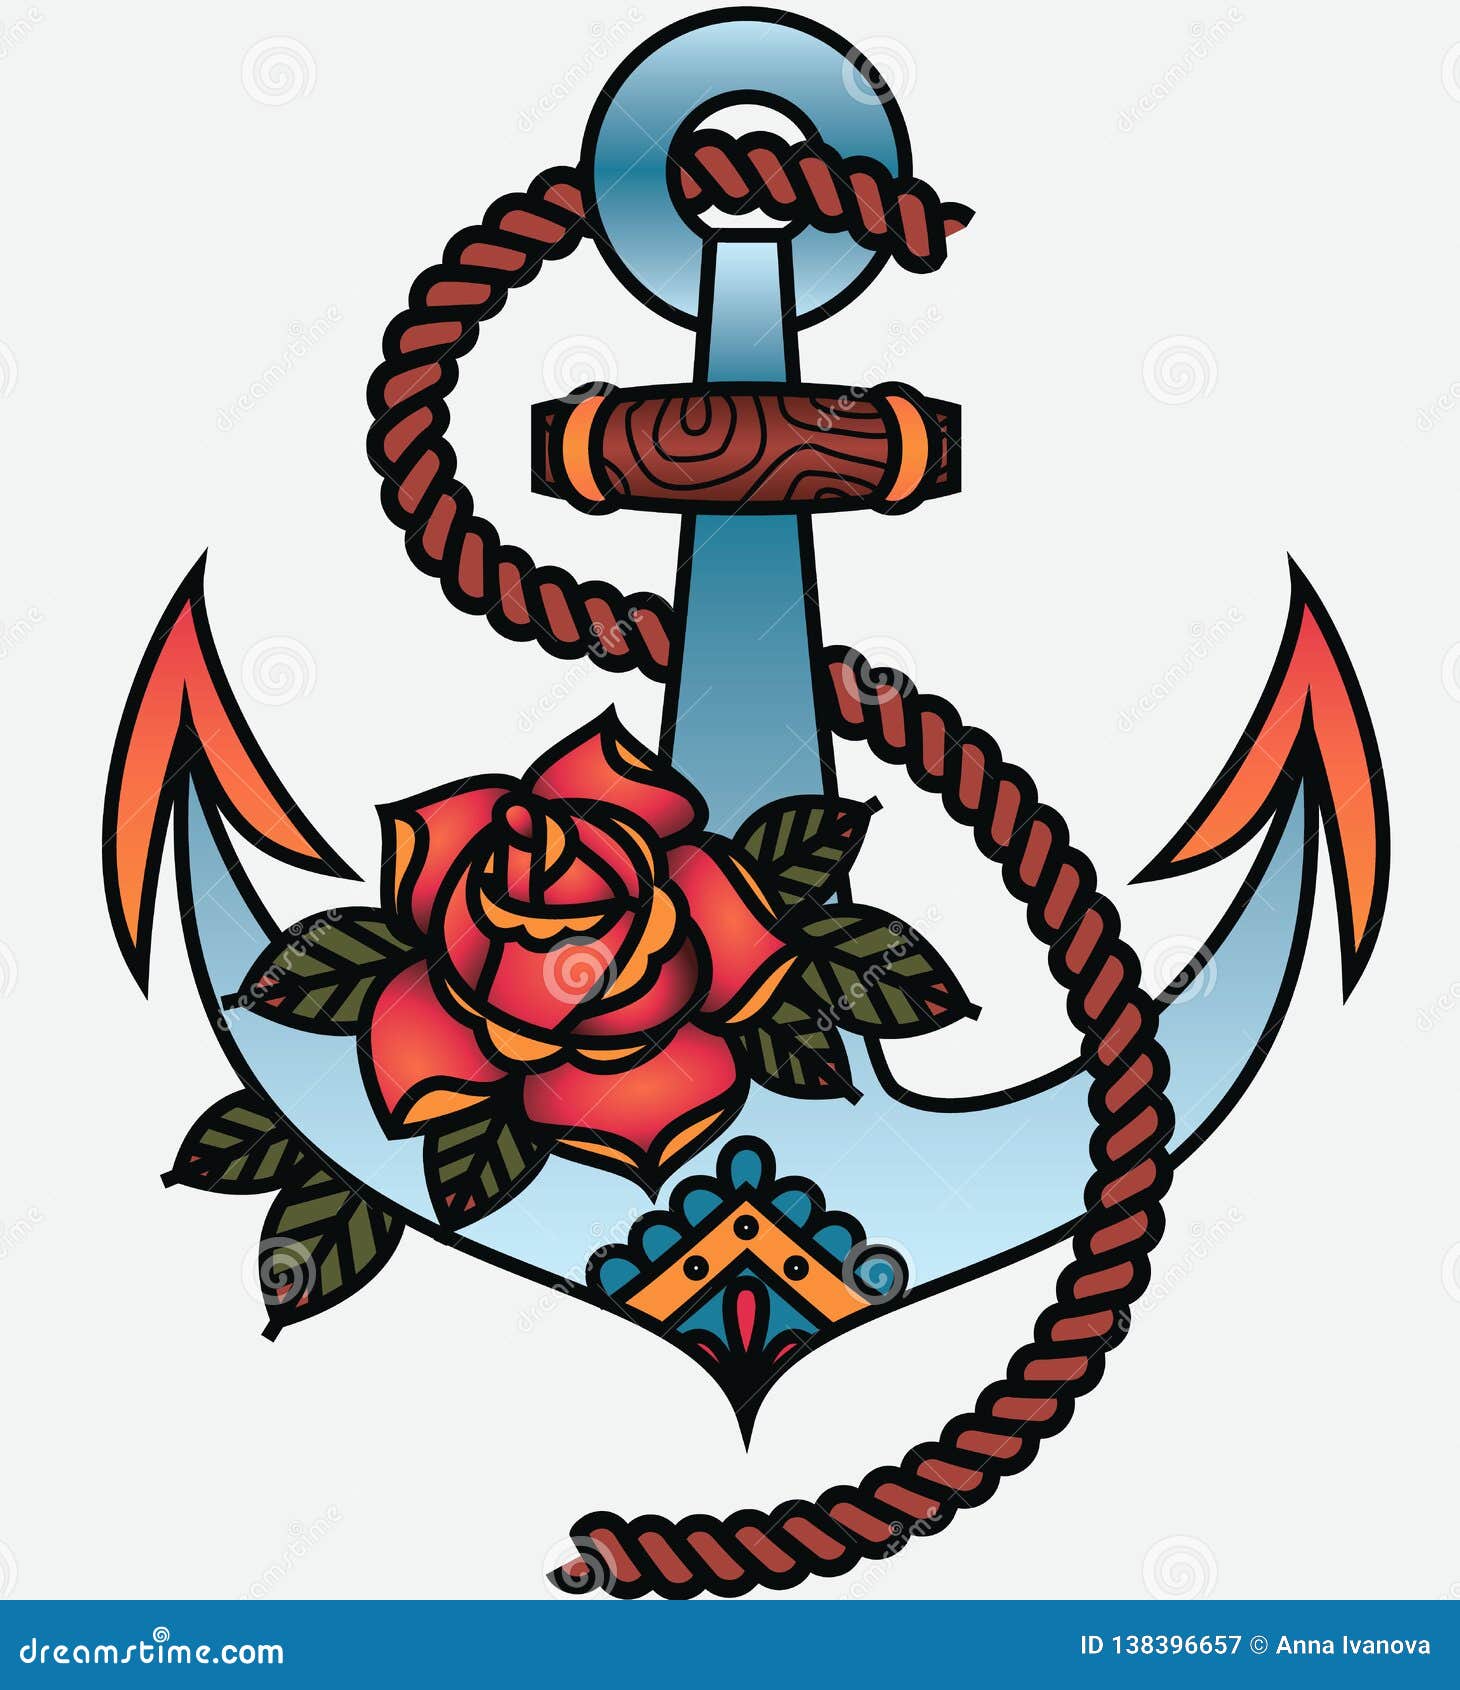 anchor rose tattoo design